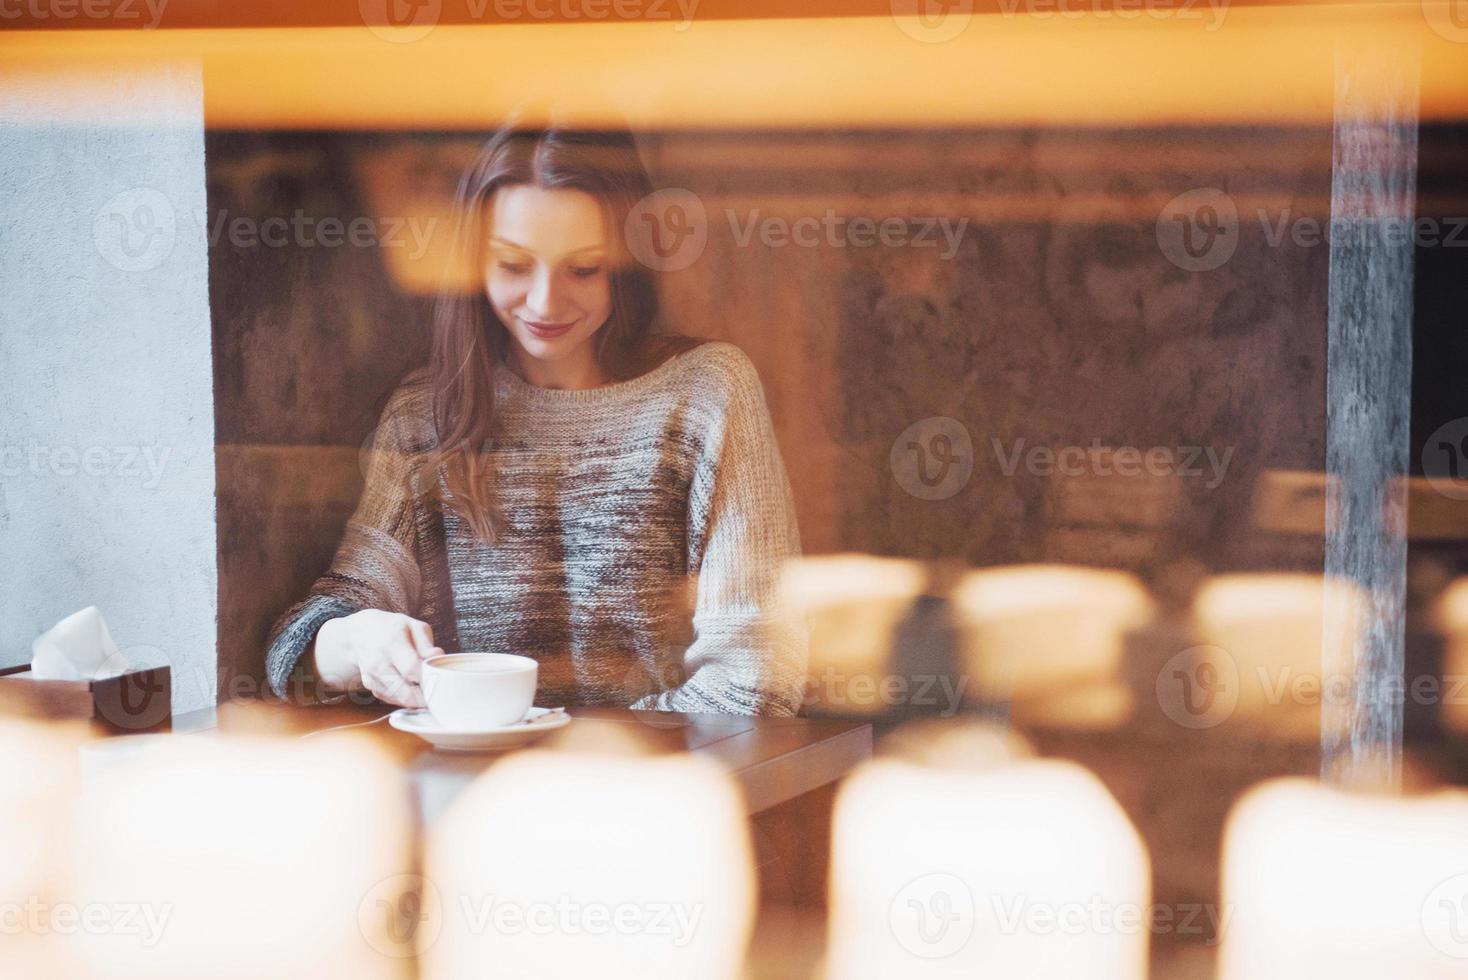 lachende vrouw in café met behulp van mobiele telefoon en sms'en in sociale netwerken, alleen zittend foto